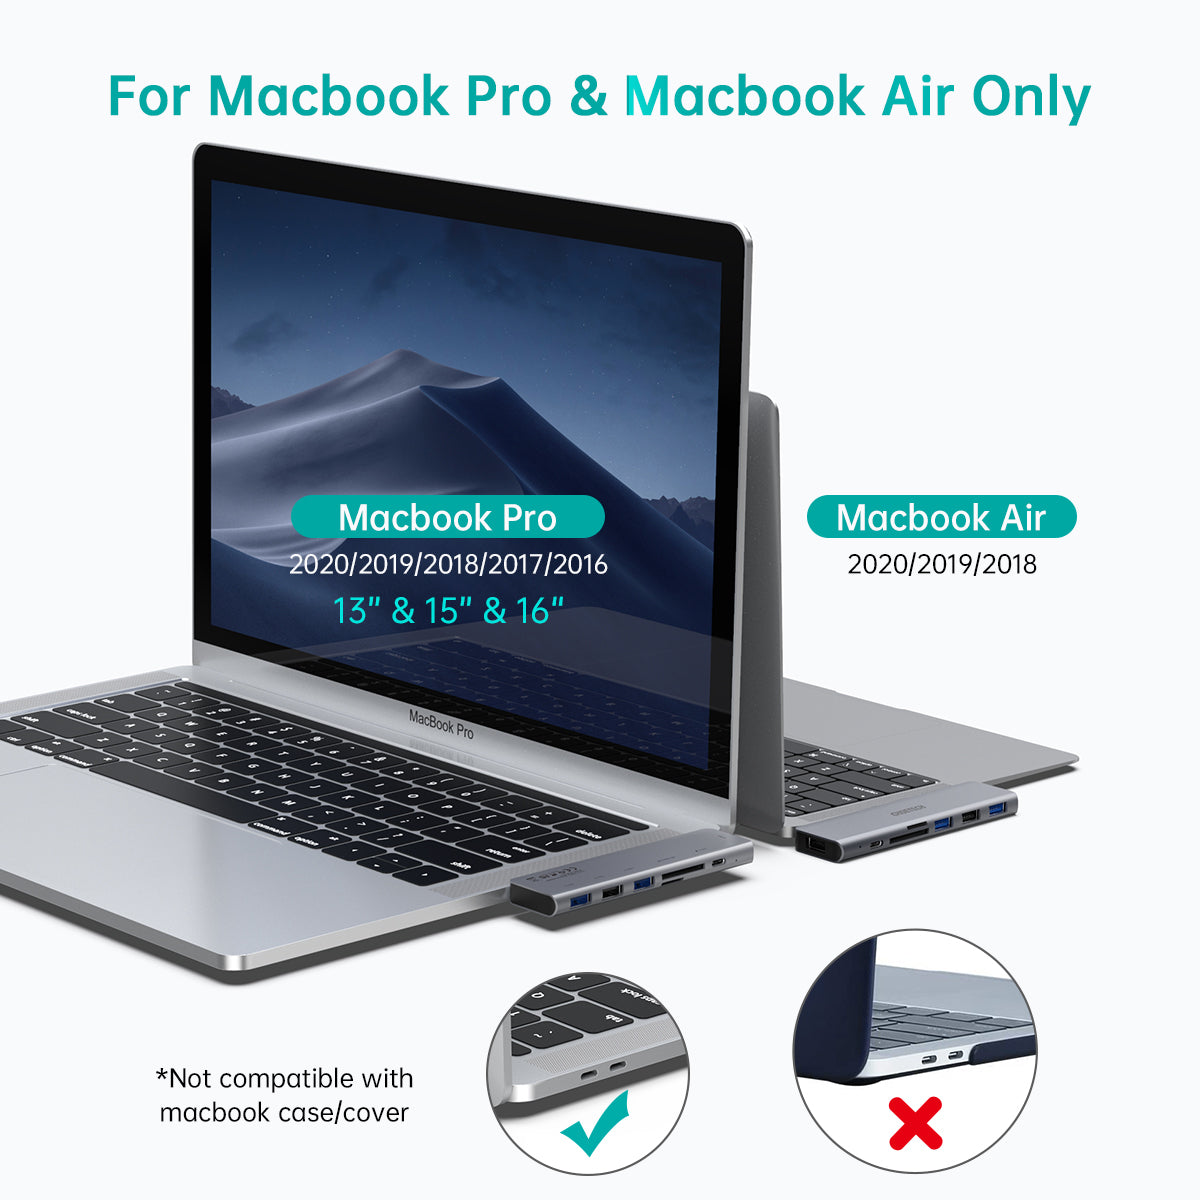 HUB-M23 Adaptador USB MacBook Pro, CHOETECH 7 en 1 Adaptador MacBook Air para MacBook Pro/Air 13-16"2016-2020, Accesorios MacBook con puerto Thunderbolt 3 100W PD, 3 puertos USB 3.0, puerto USB 2.0, tarjeta TF/SD Lector